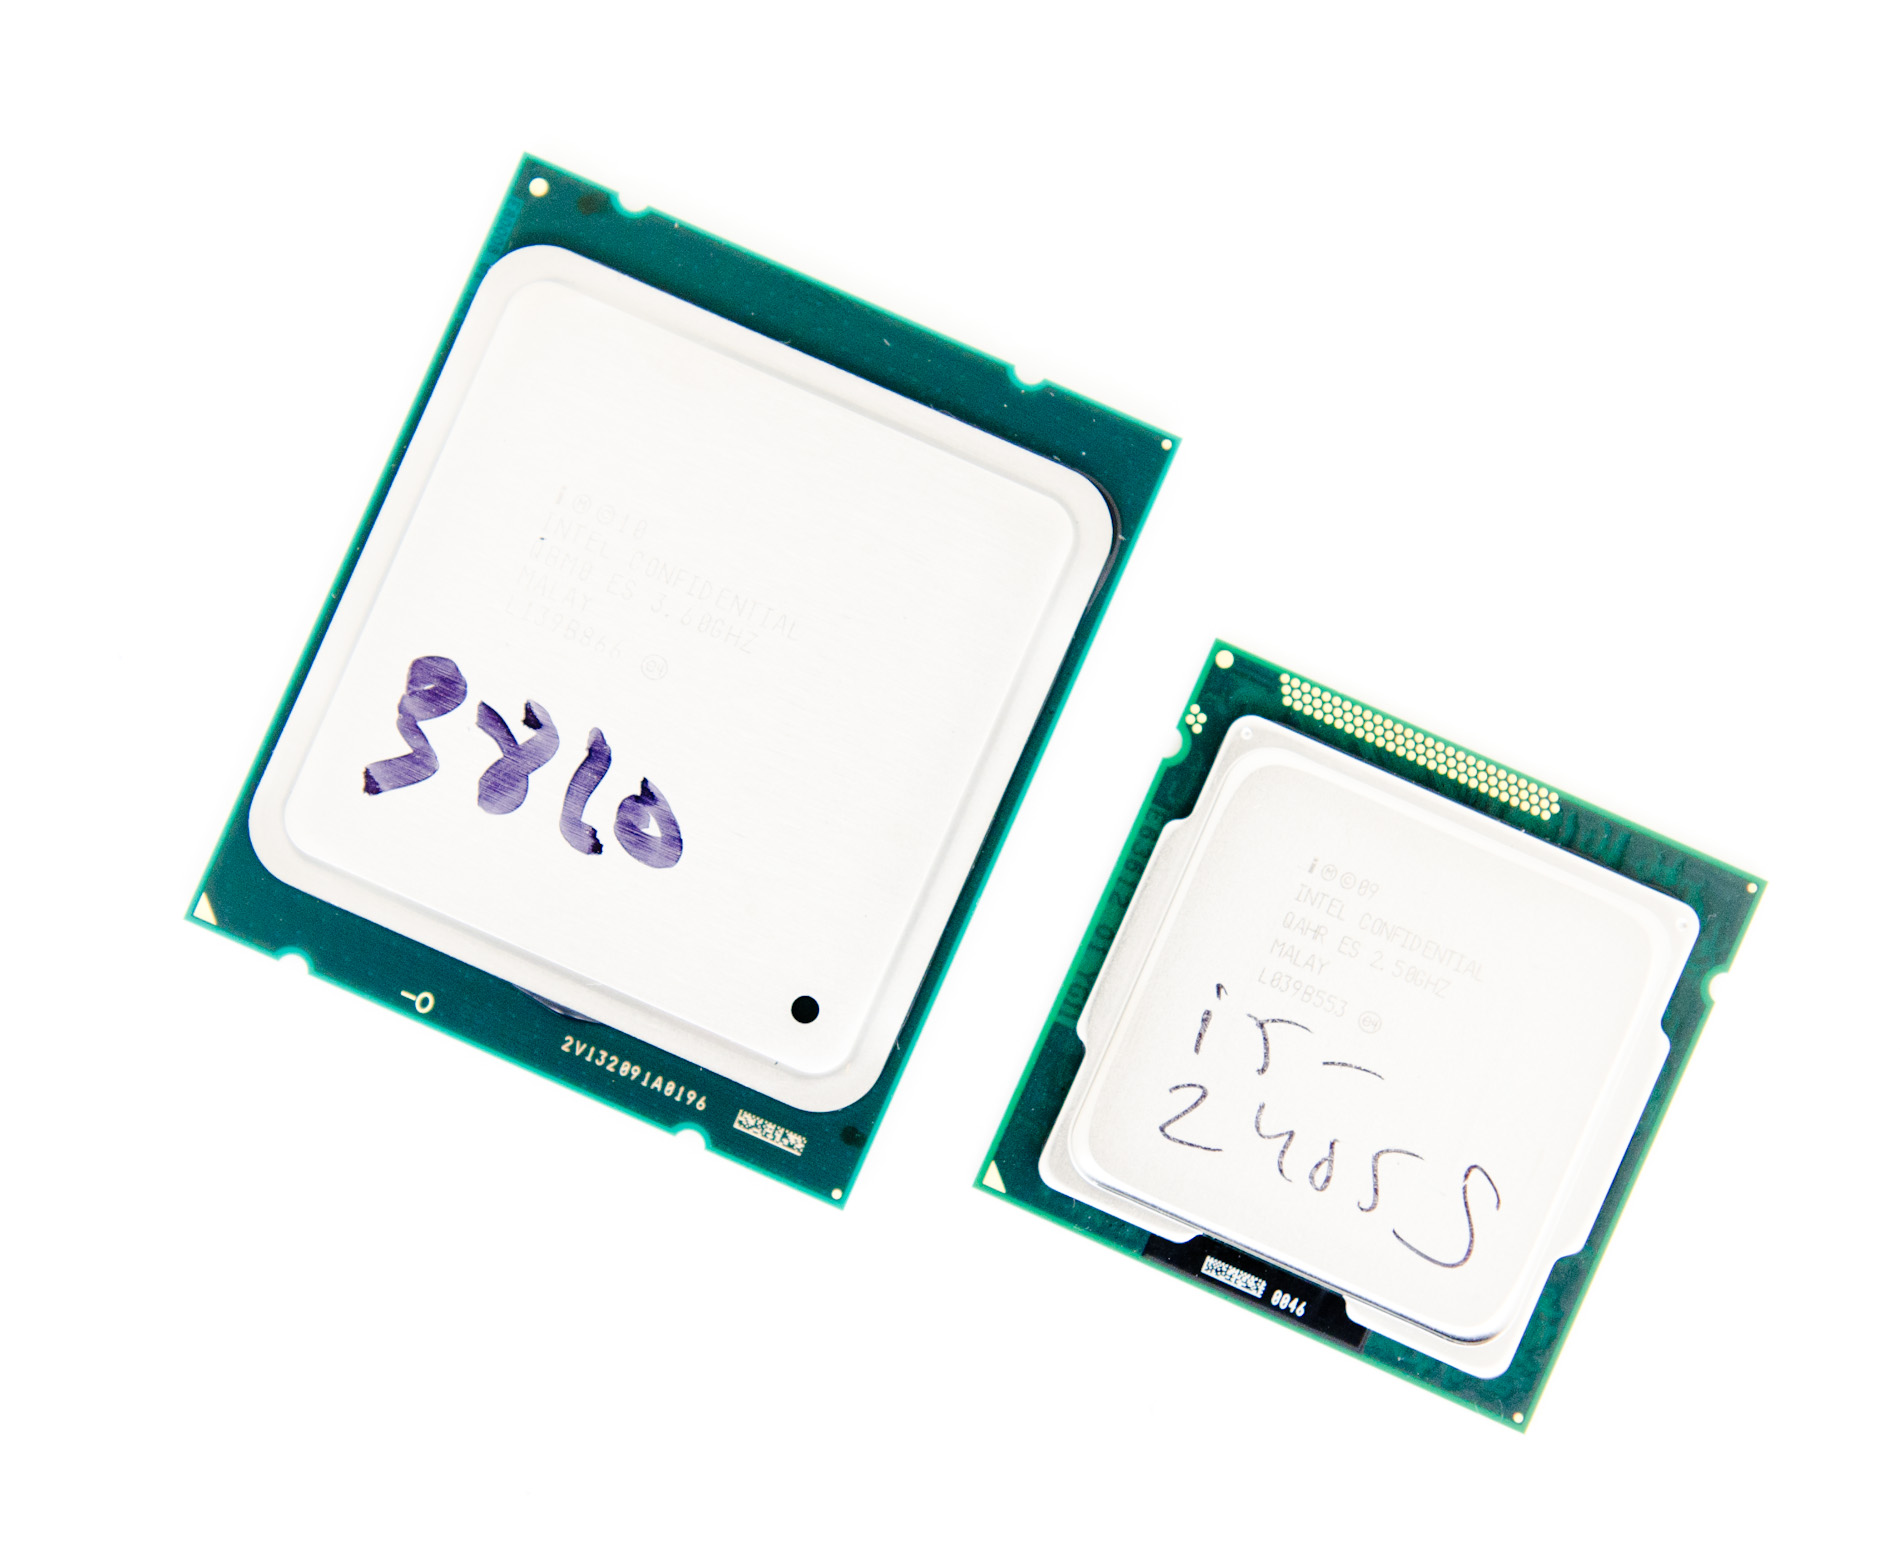 Onderling verbinden diagonaal schildpad Intel Core i7 3820 Review: $285 Quad-Core Sandy Bridge E